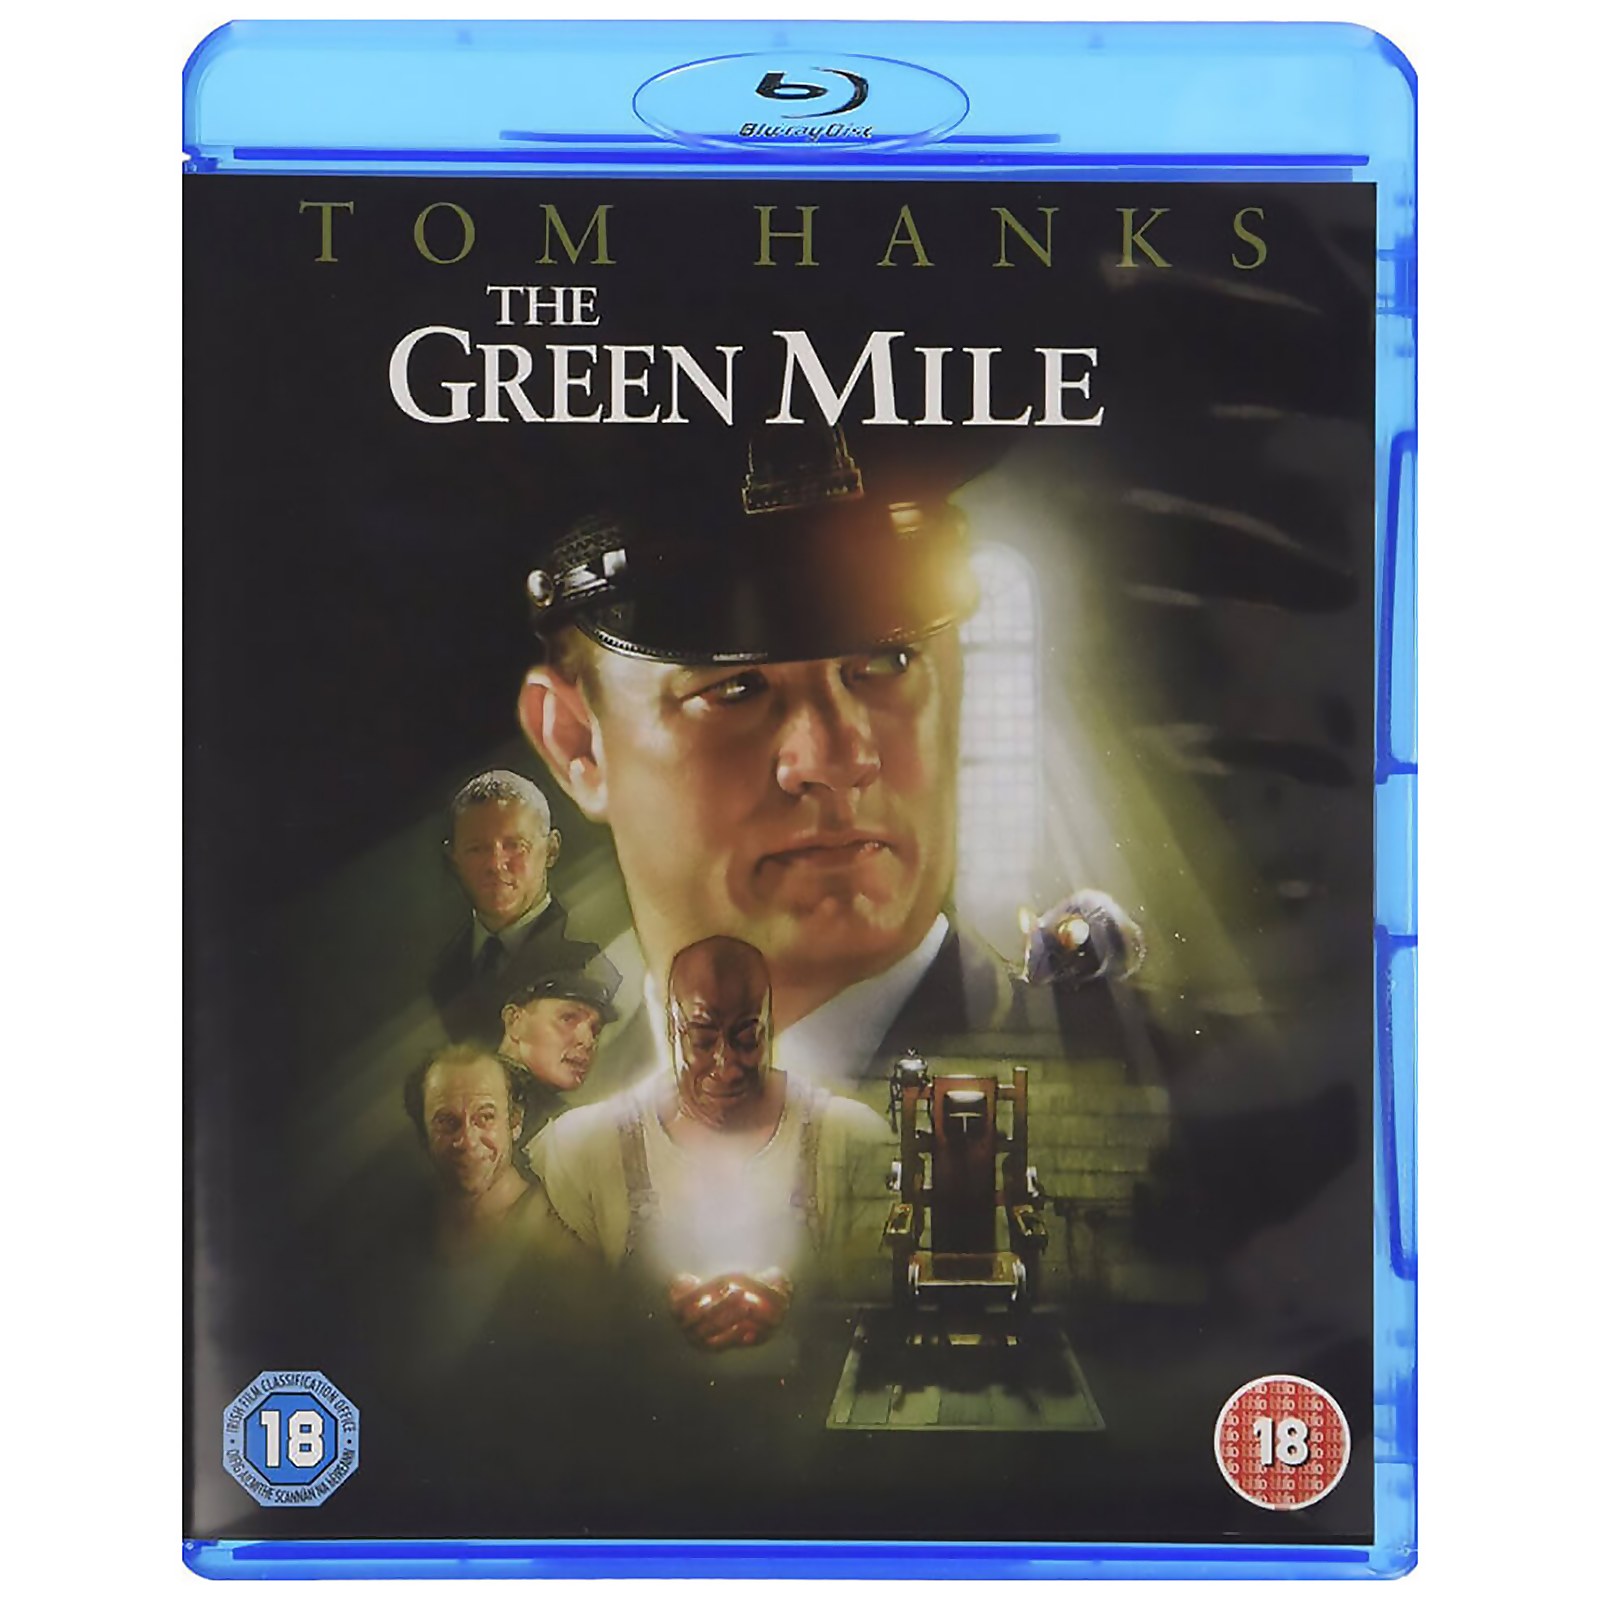 The Green Mile - L'edition du 15e anniversaire